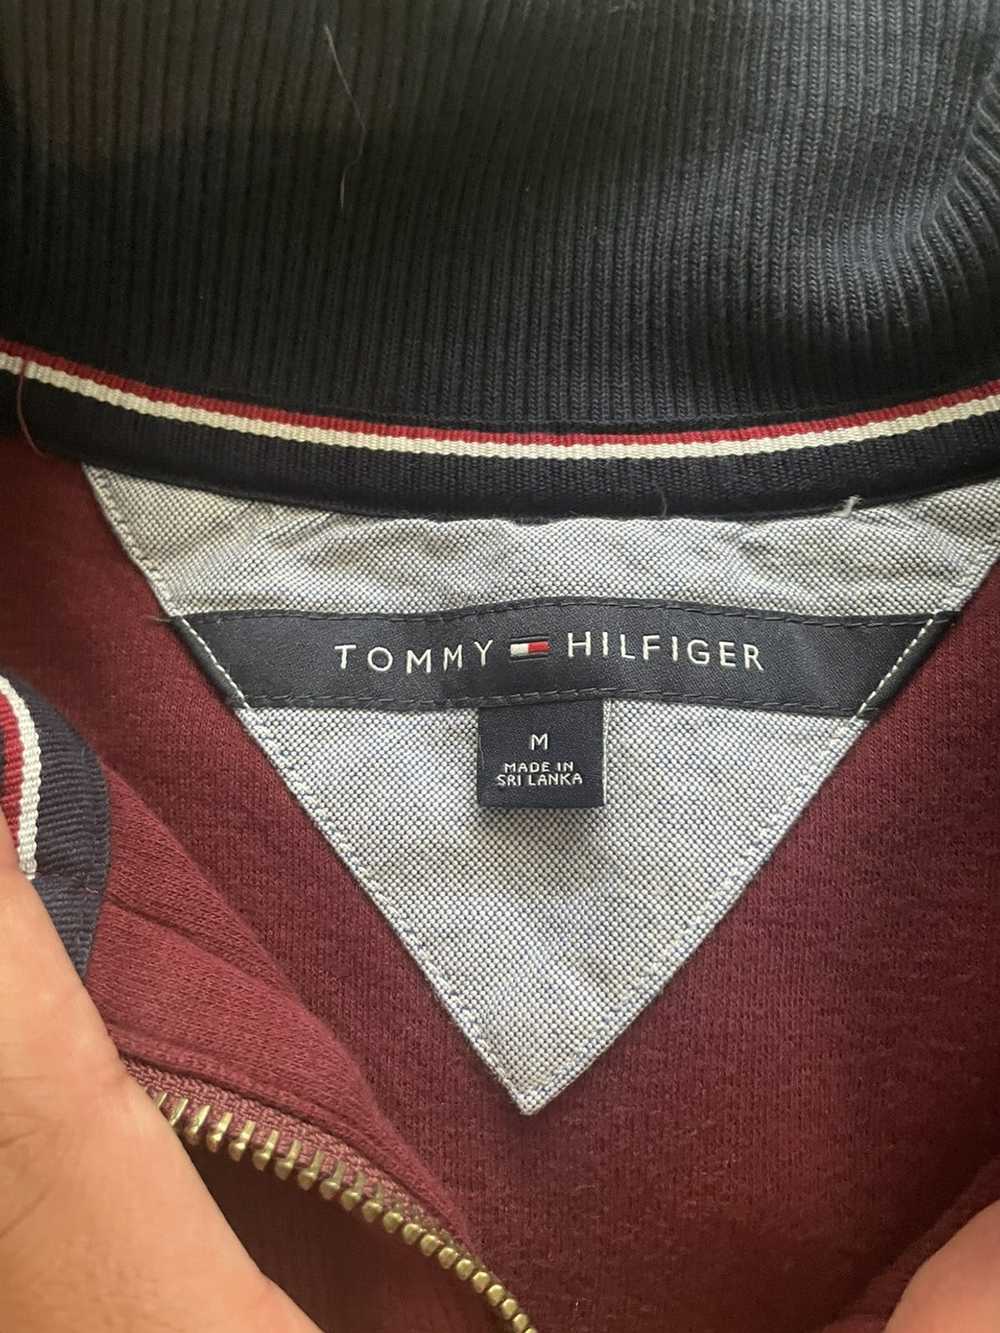 Tommy Hilfiger Tommy Hilfiger Zip Up Sweater - image 3